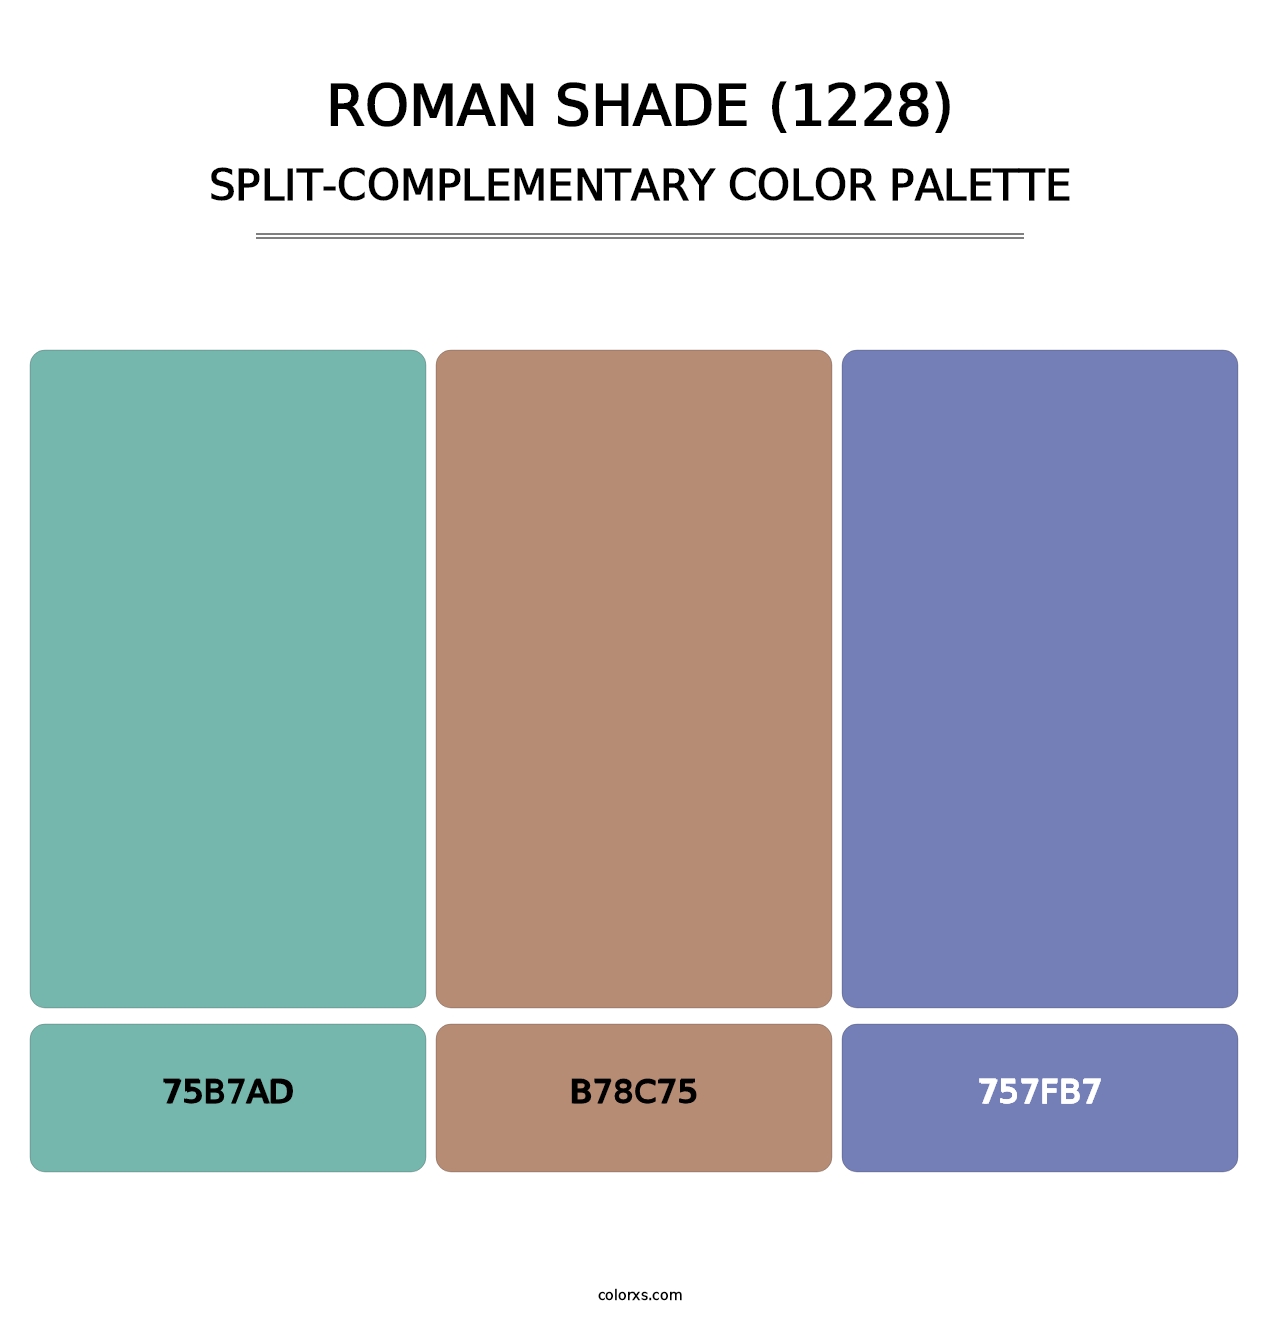 Roman Shade (1228) - Split-Complementary Color Palette